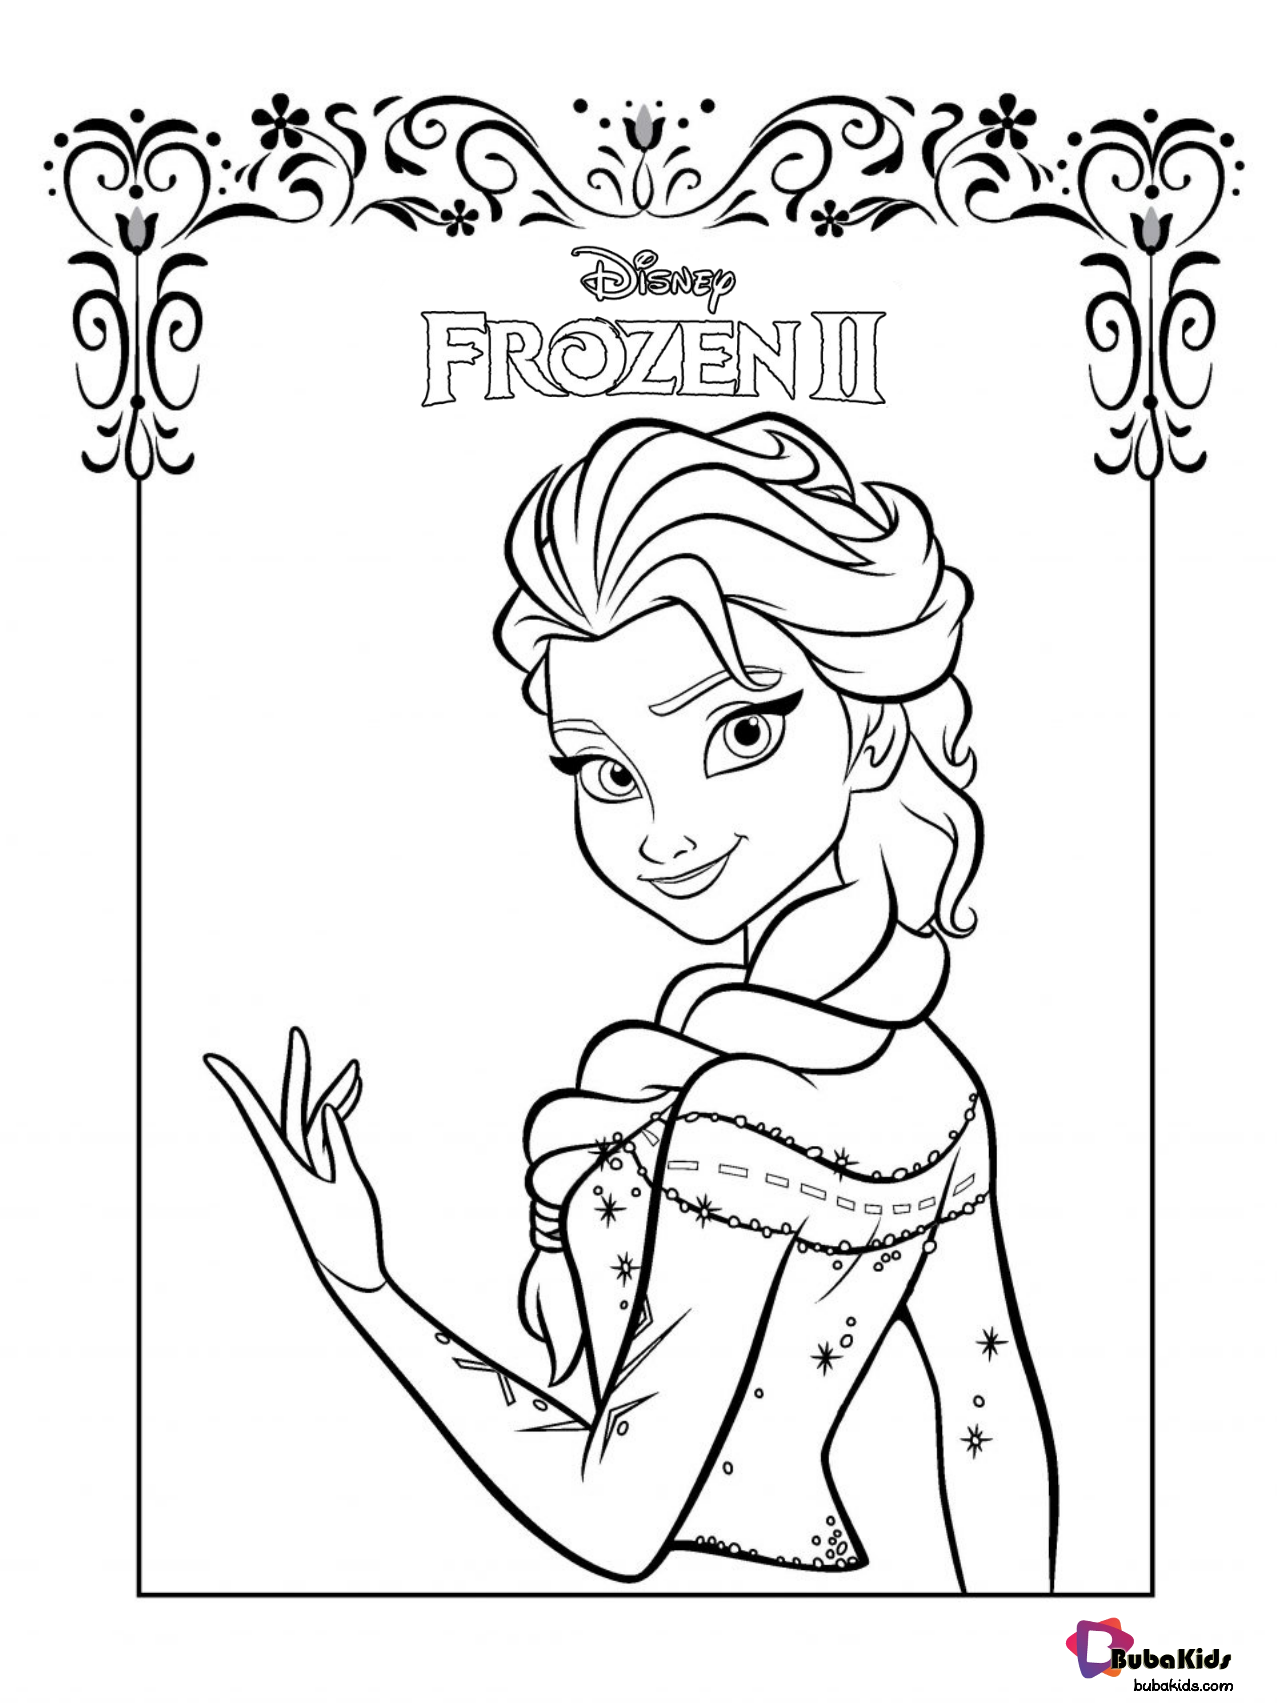 Frozen 2 Beautiful Queen Elsa coloring page. Wallpaper